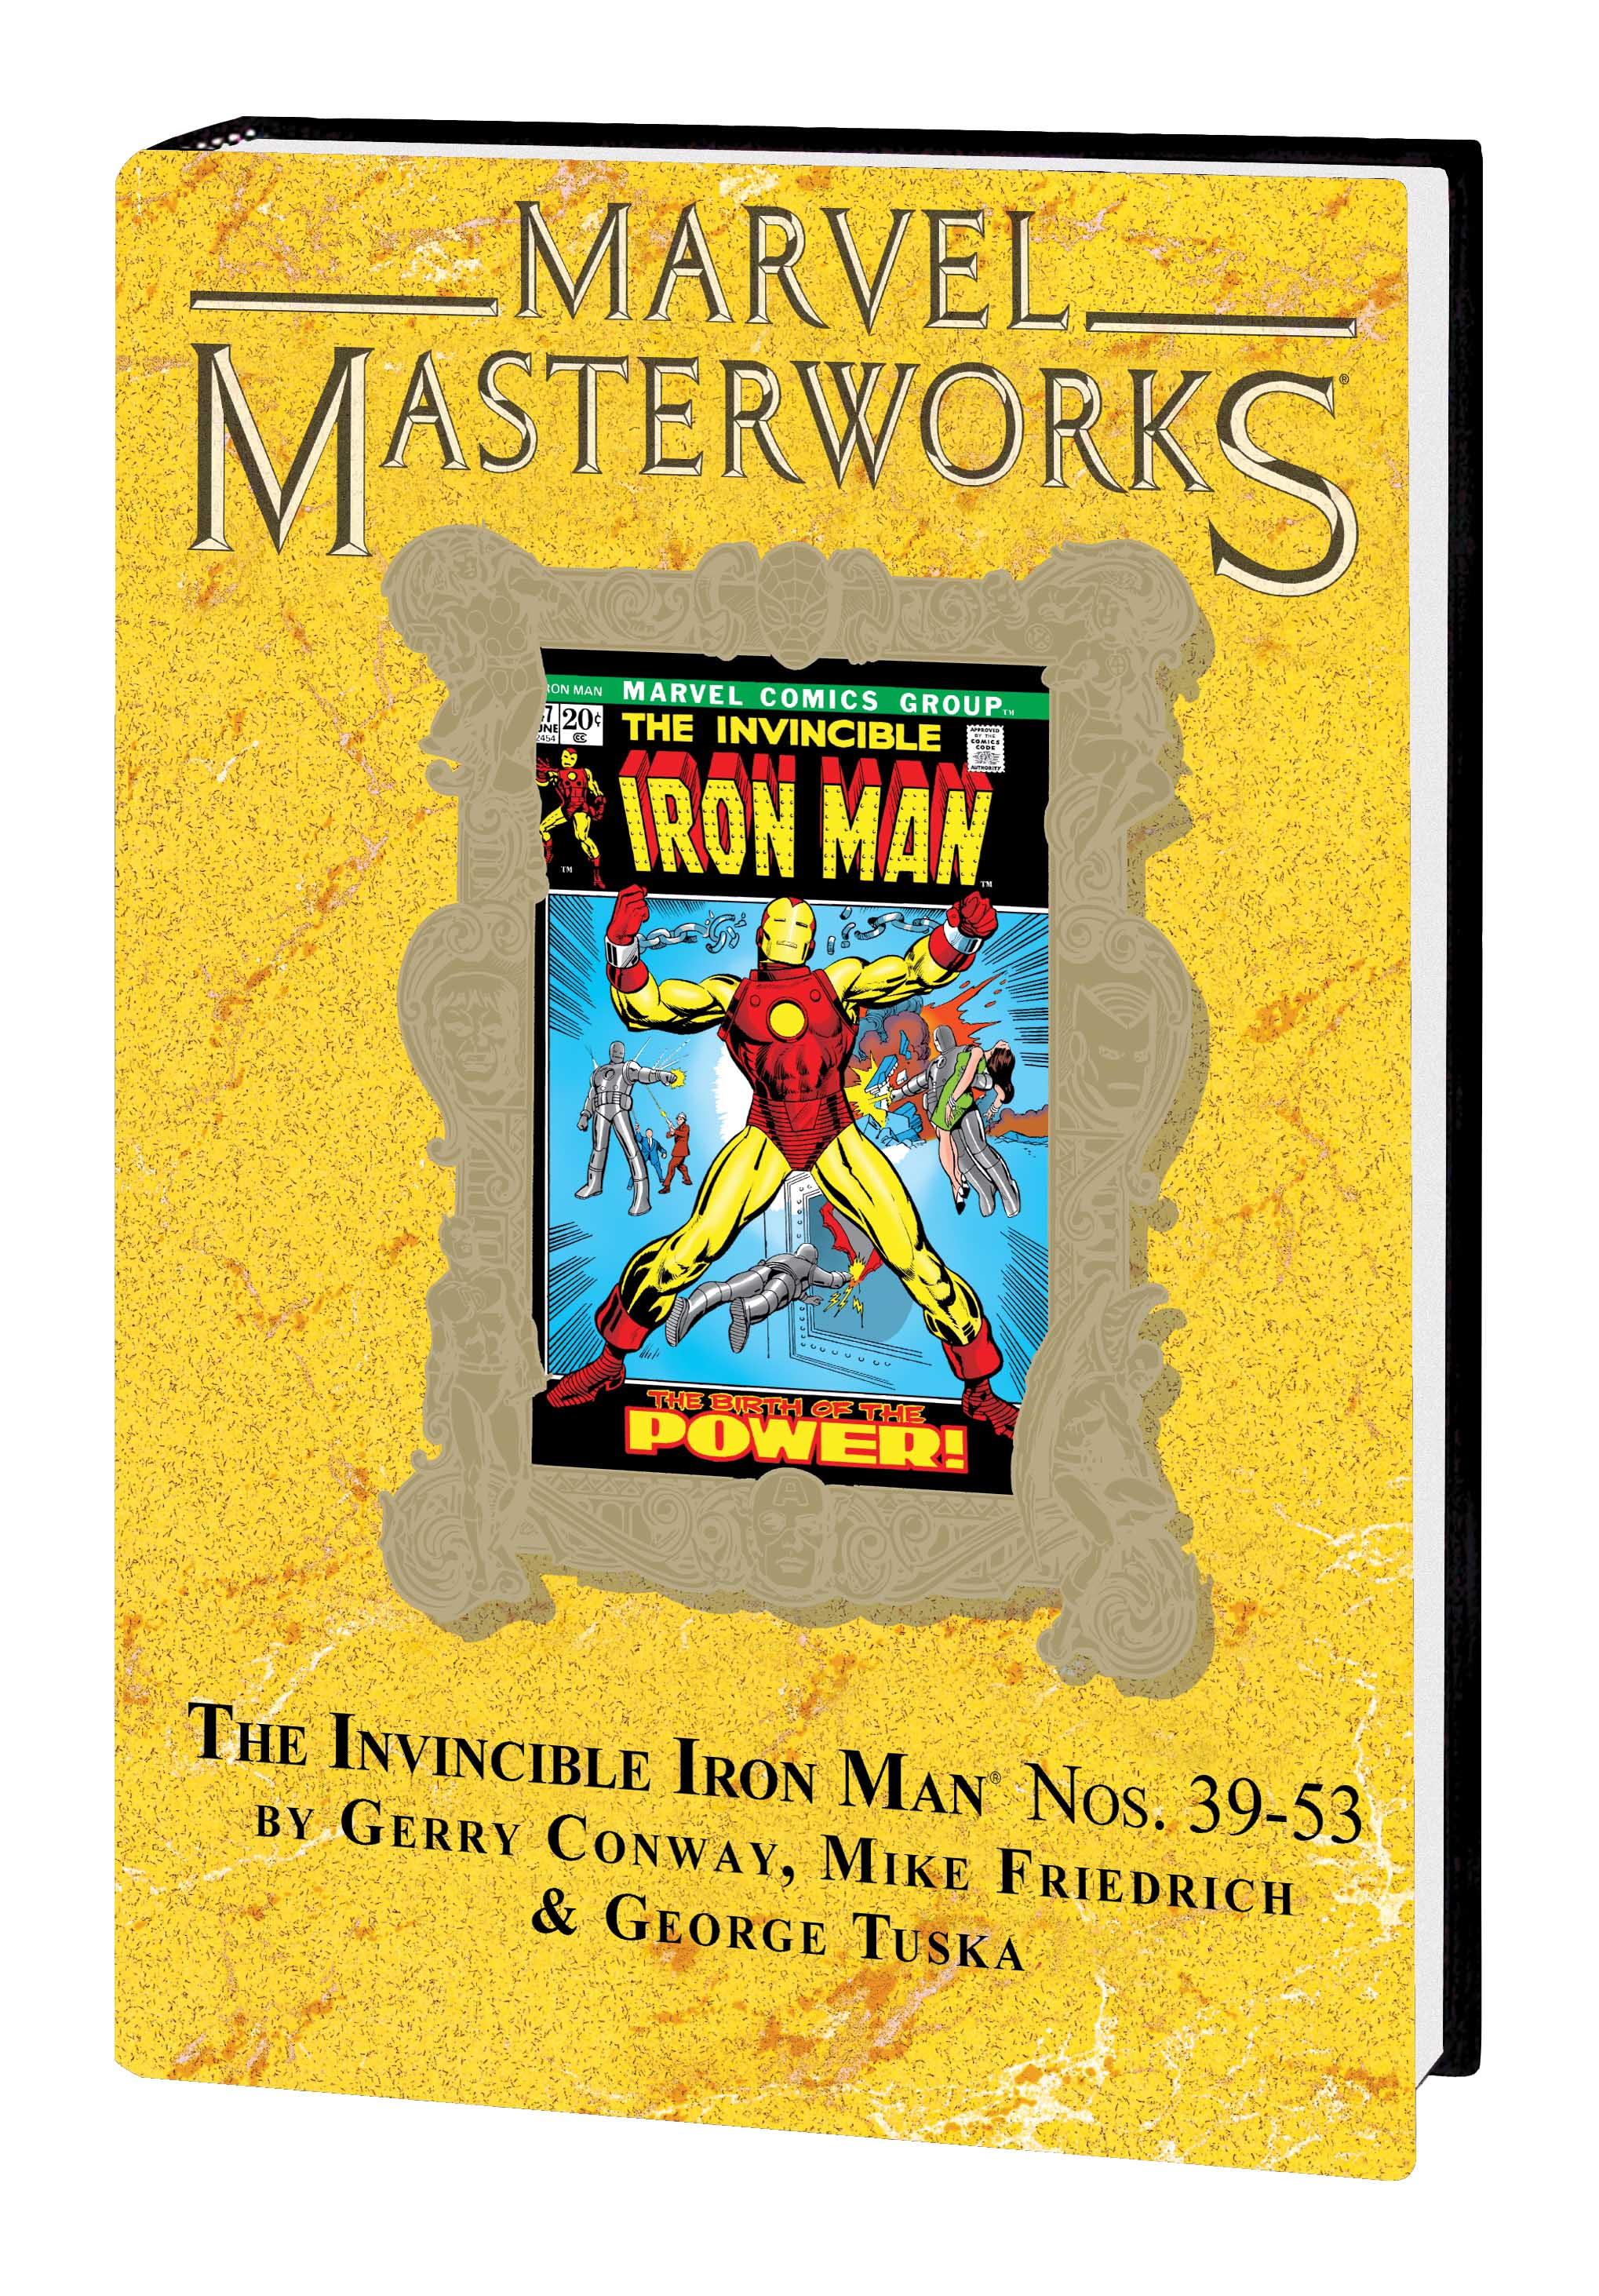 165 The Invincible Iron Man Hardcover Ltd to 950 Marvel Masterworks Variant Vol 